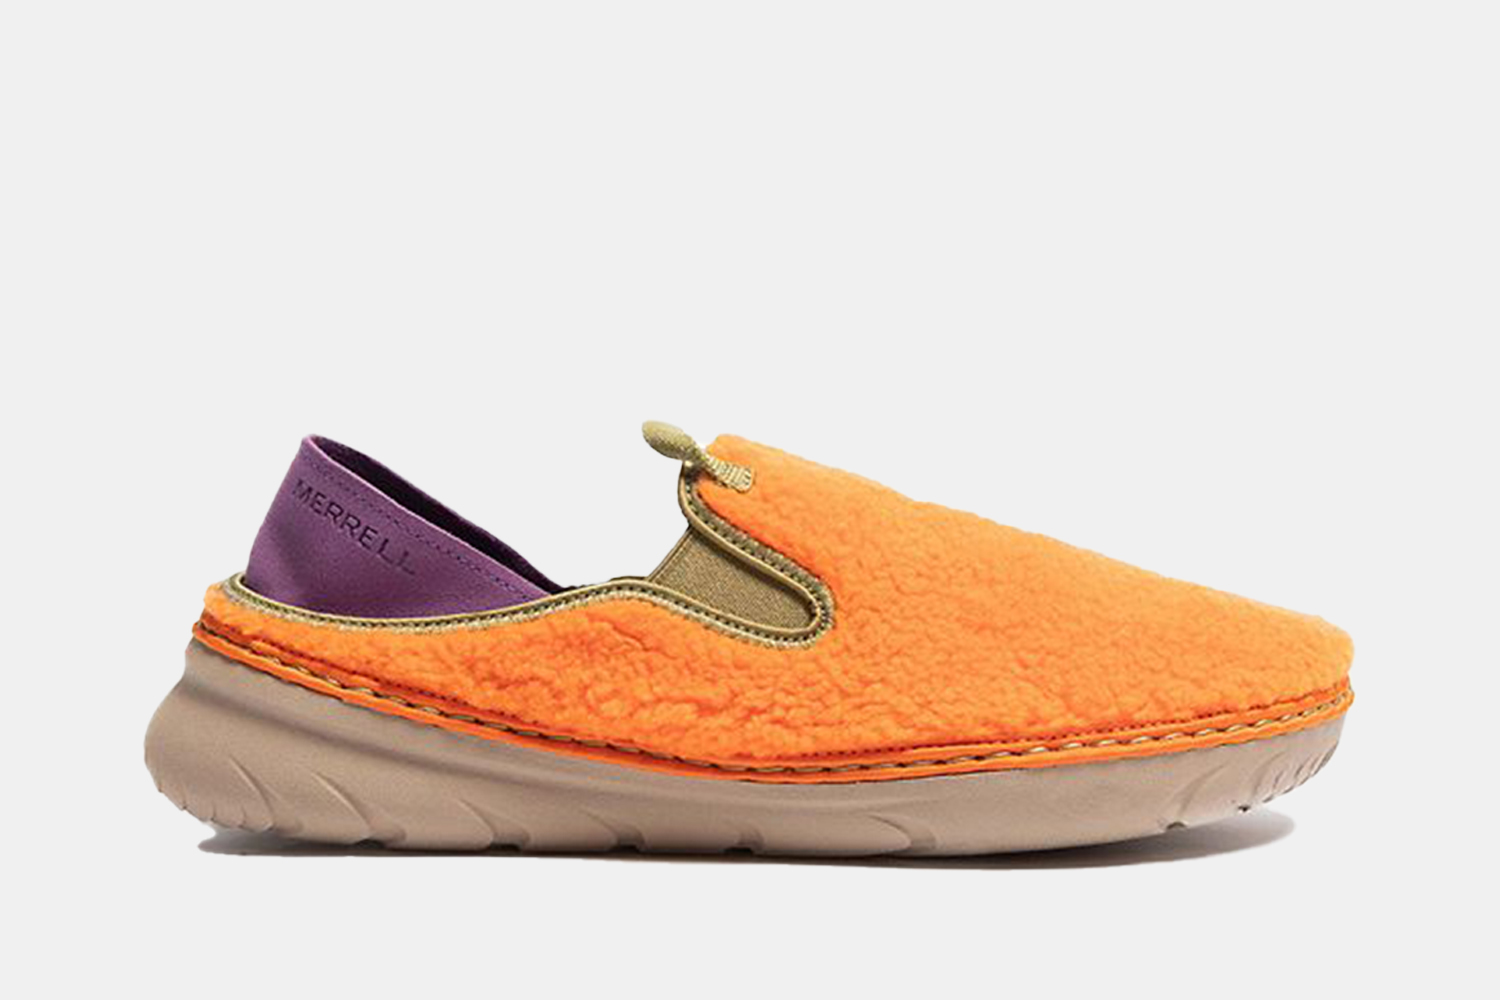 a bright orange moc style fleecy slipper